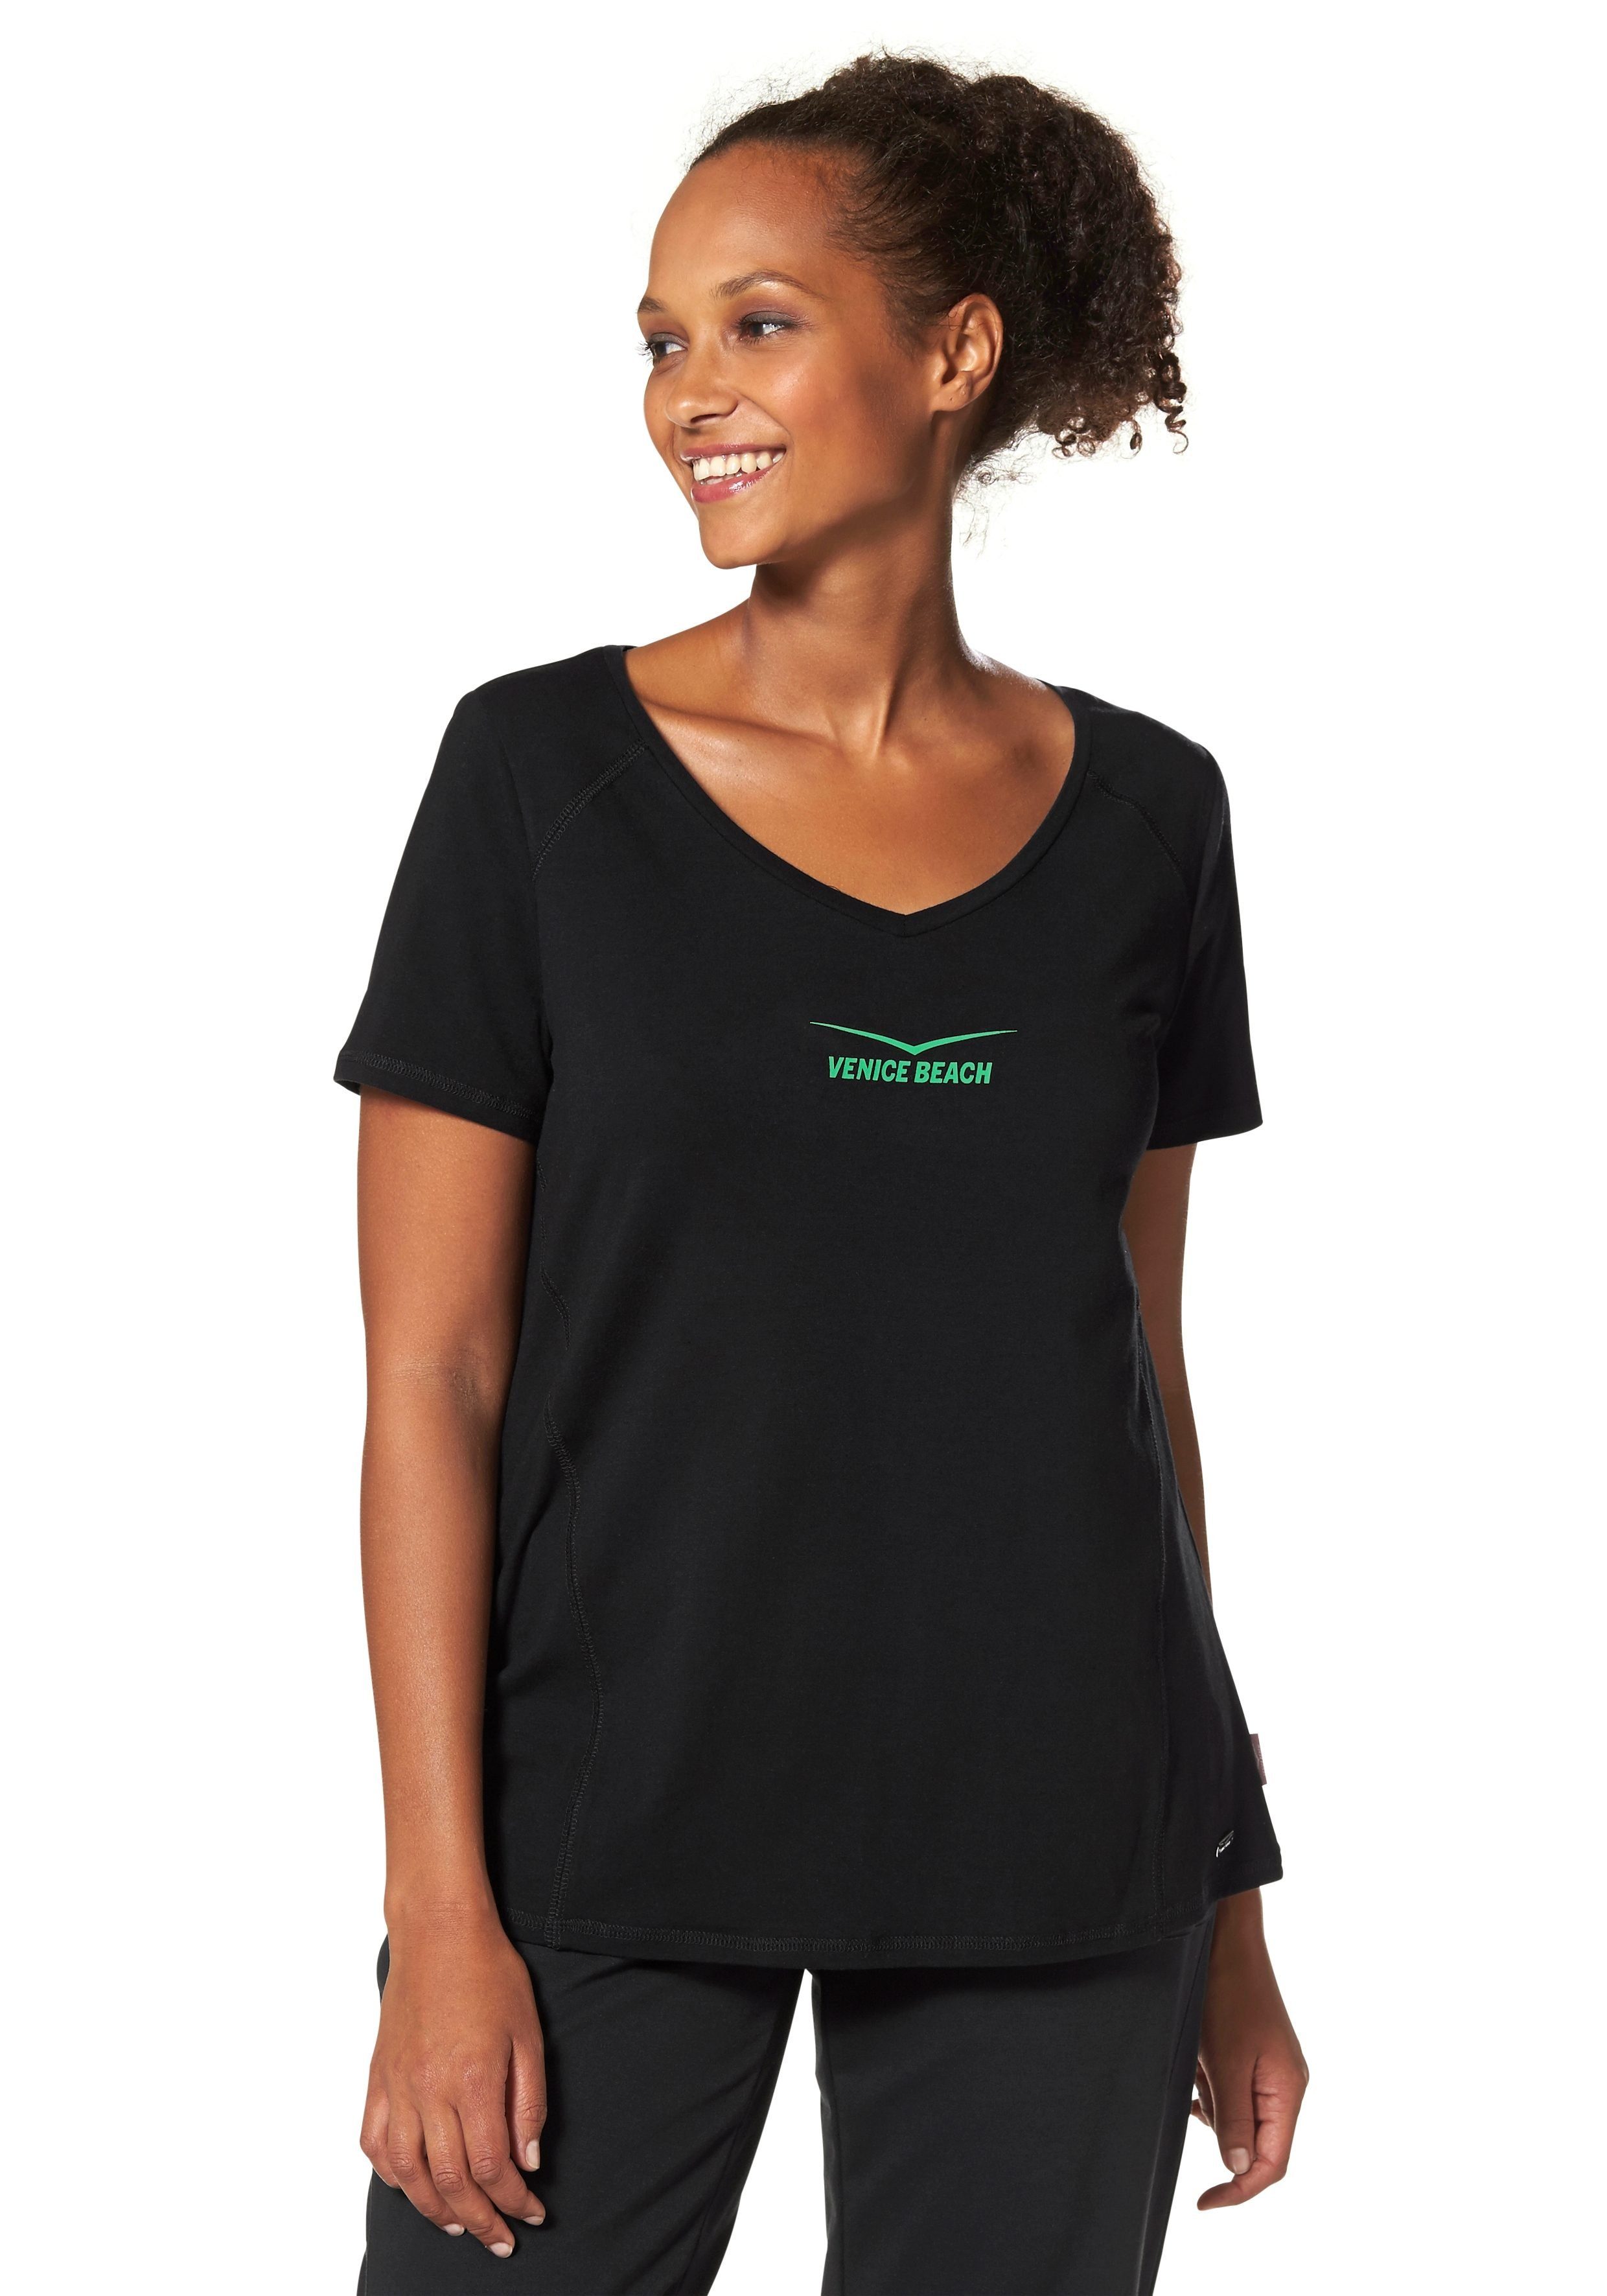 Venice Beach T-Shirt Größen Große schwarz